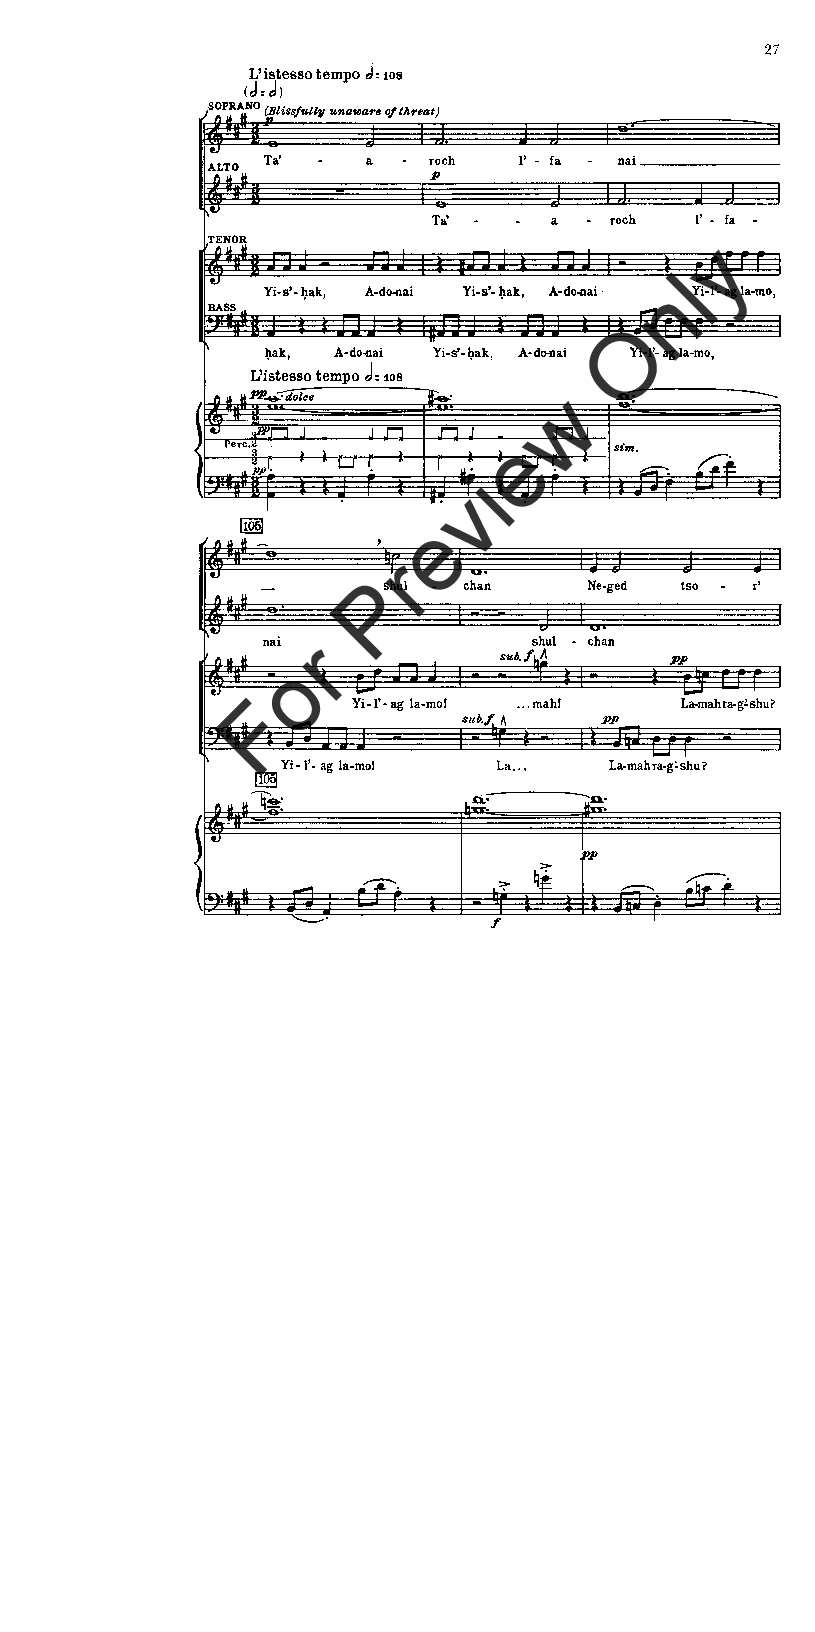 Chichester Psalms Complete Vocal Score